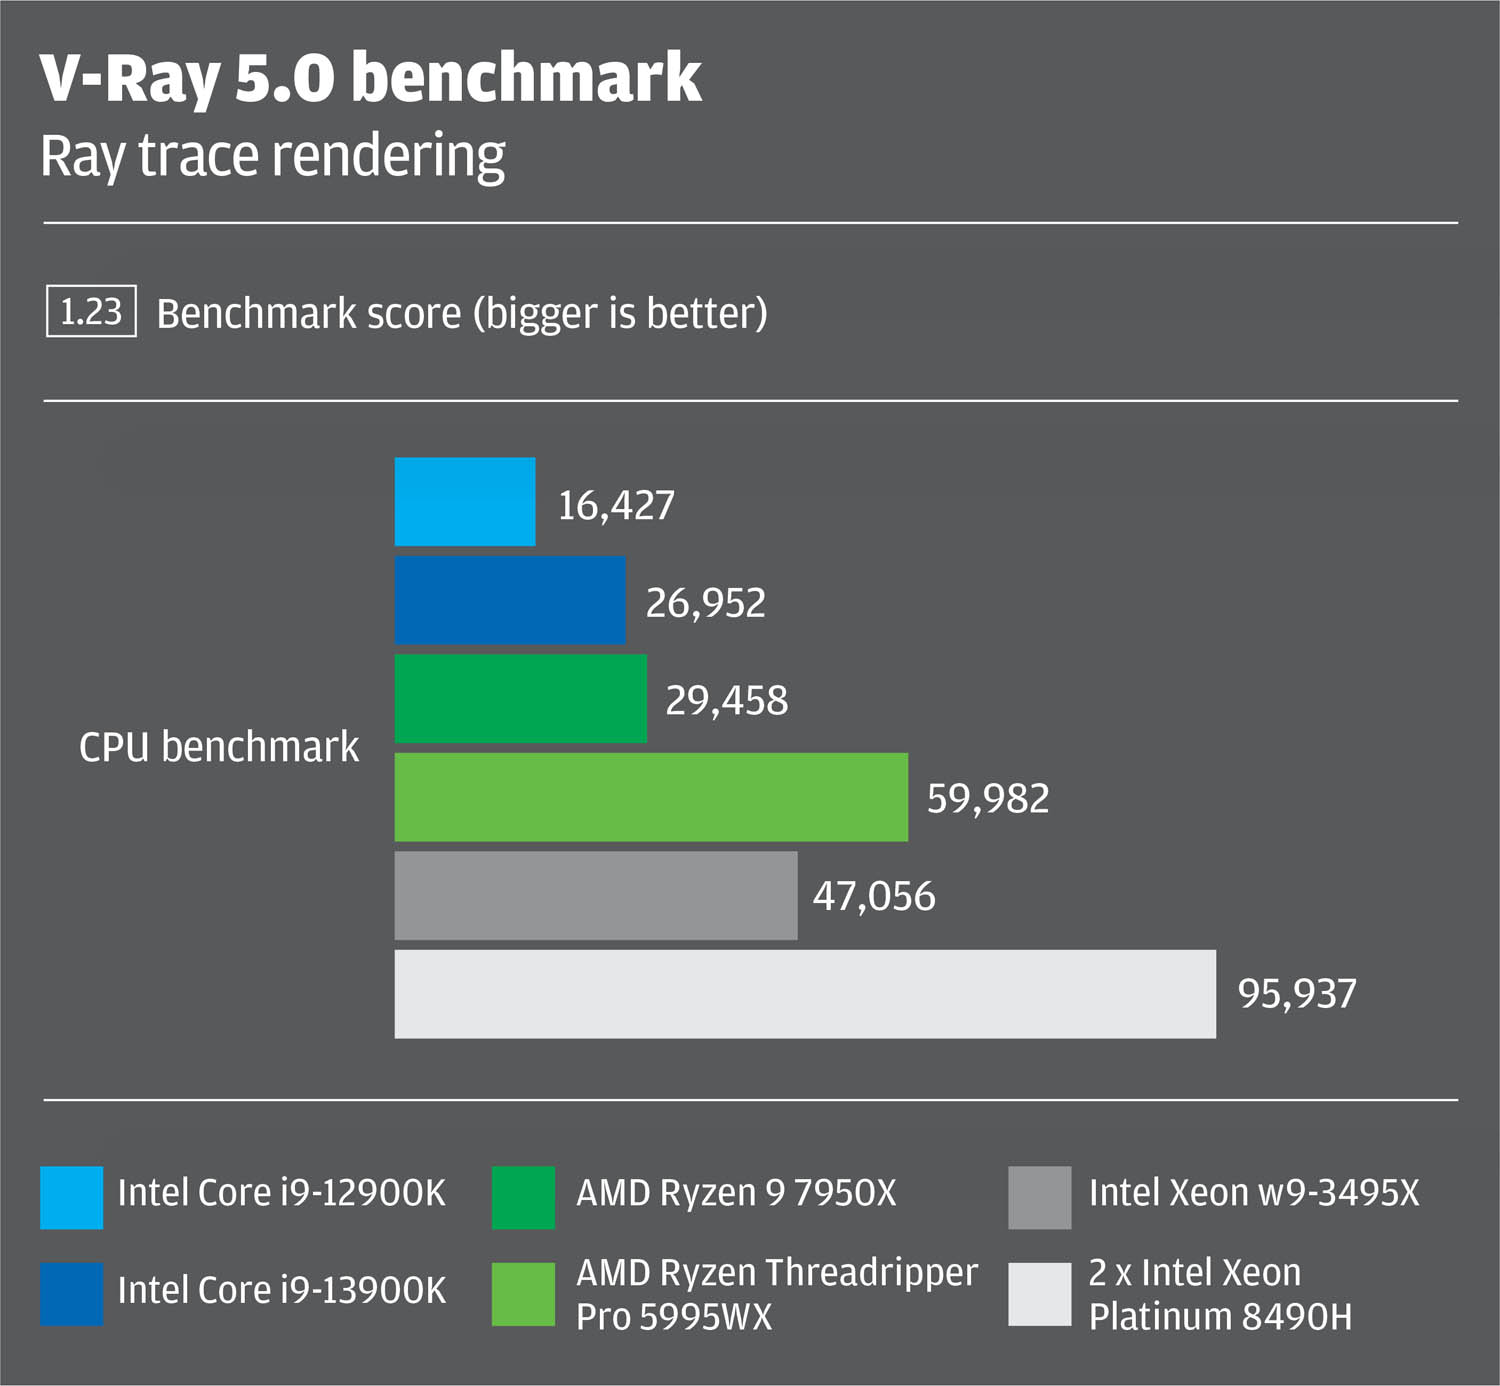 Intel Xeon Sapphire rapids vs AMD Ryzen Threadripper Pro in V-Ray